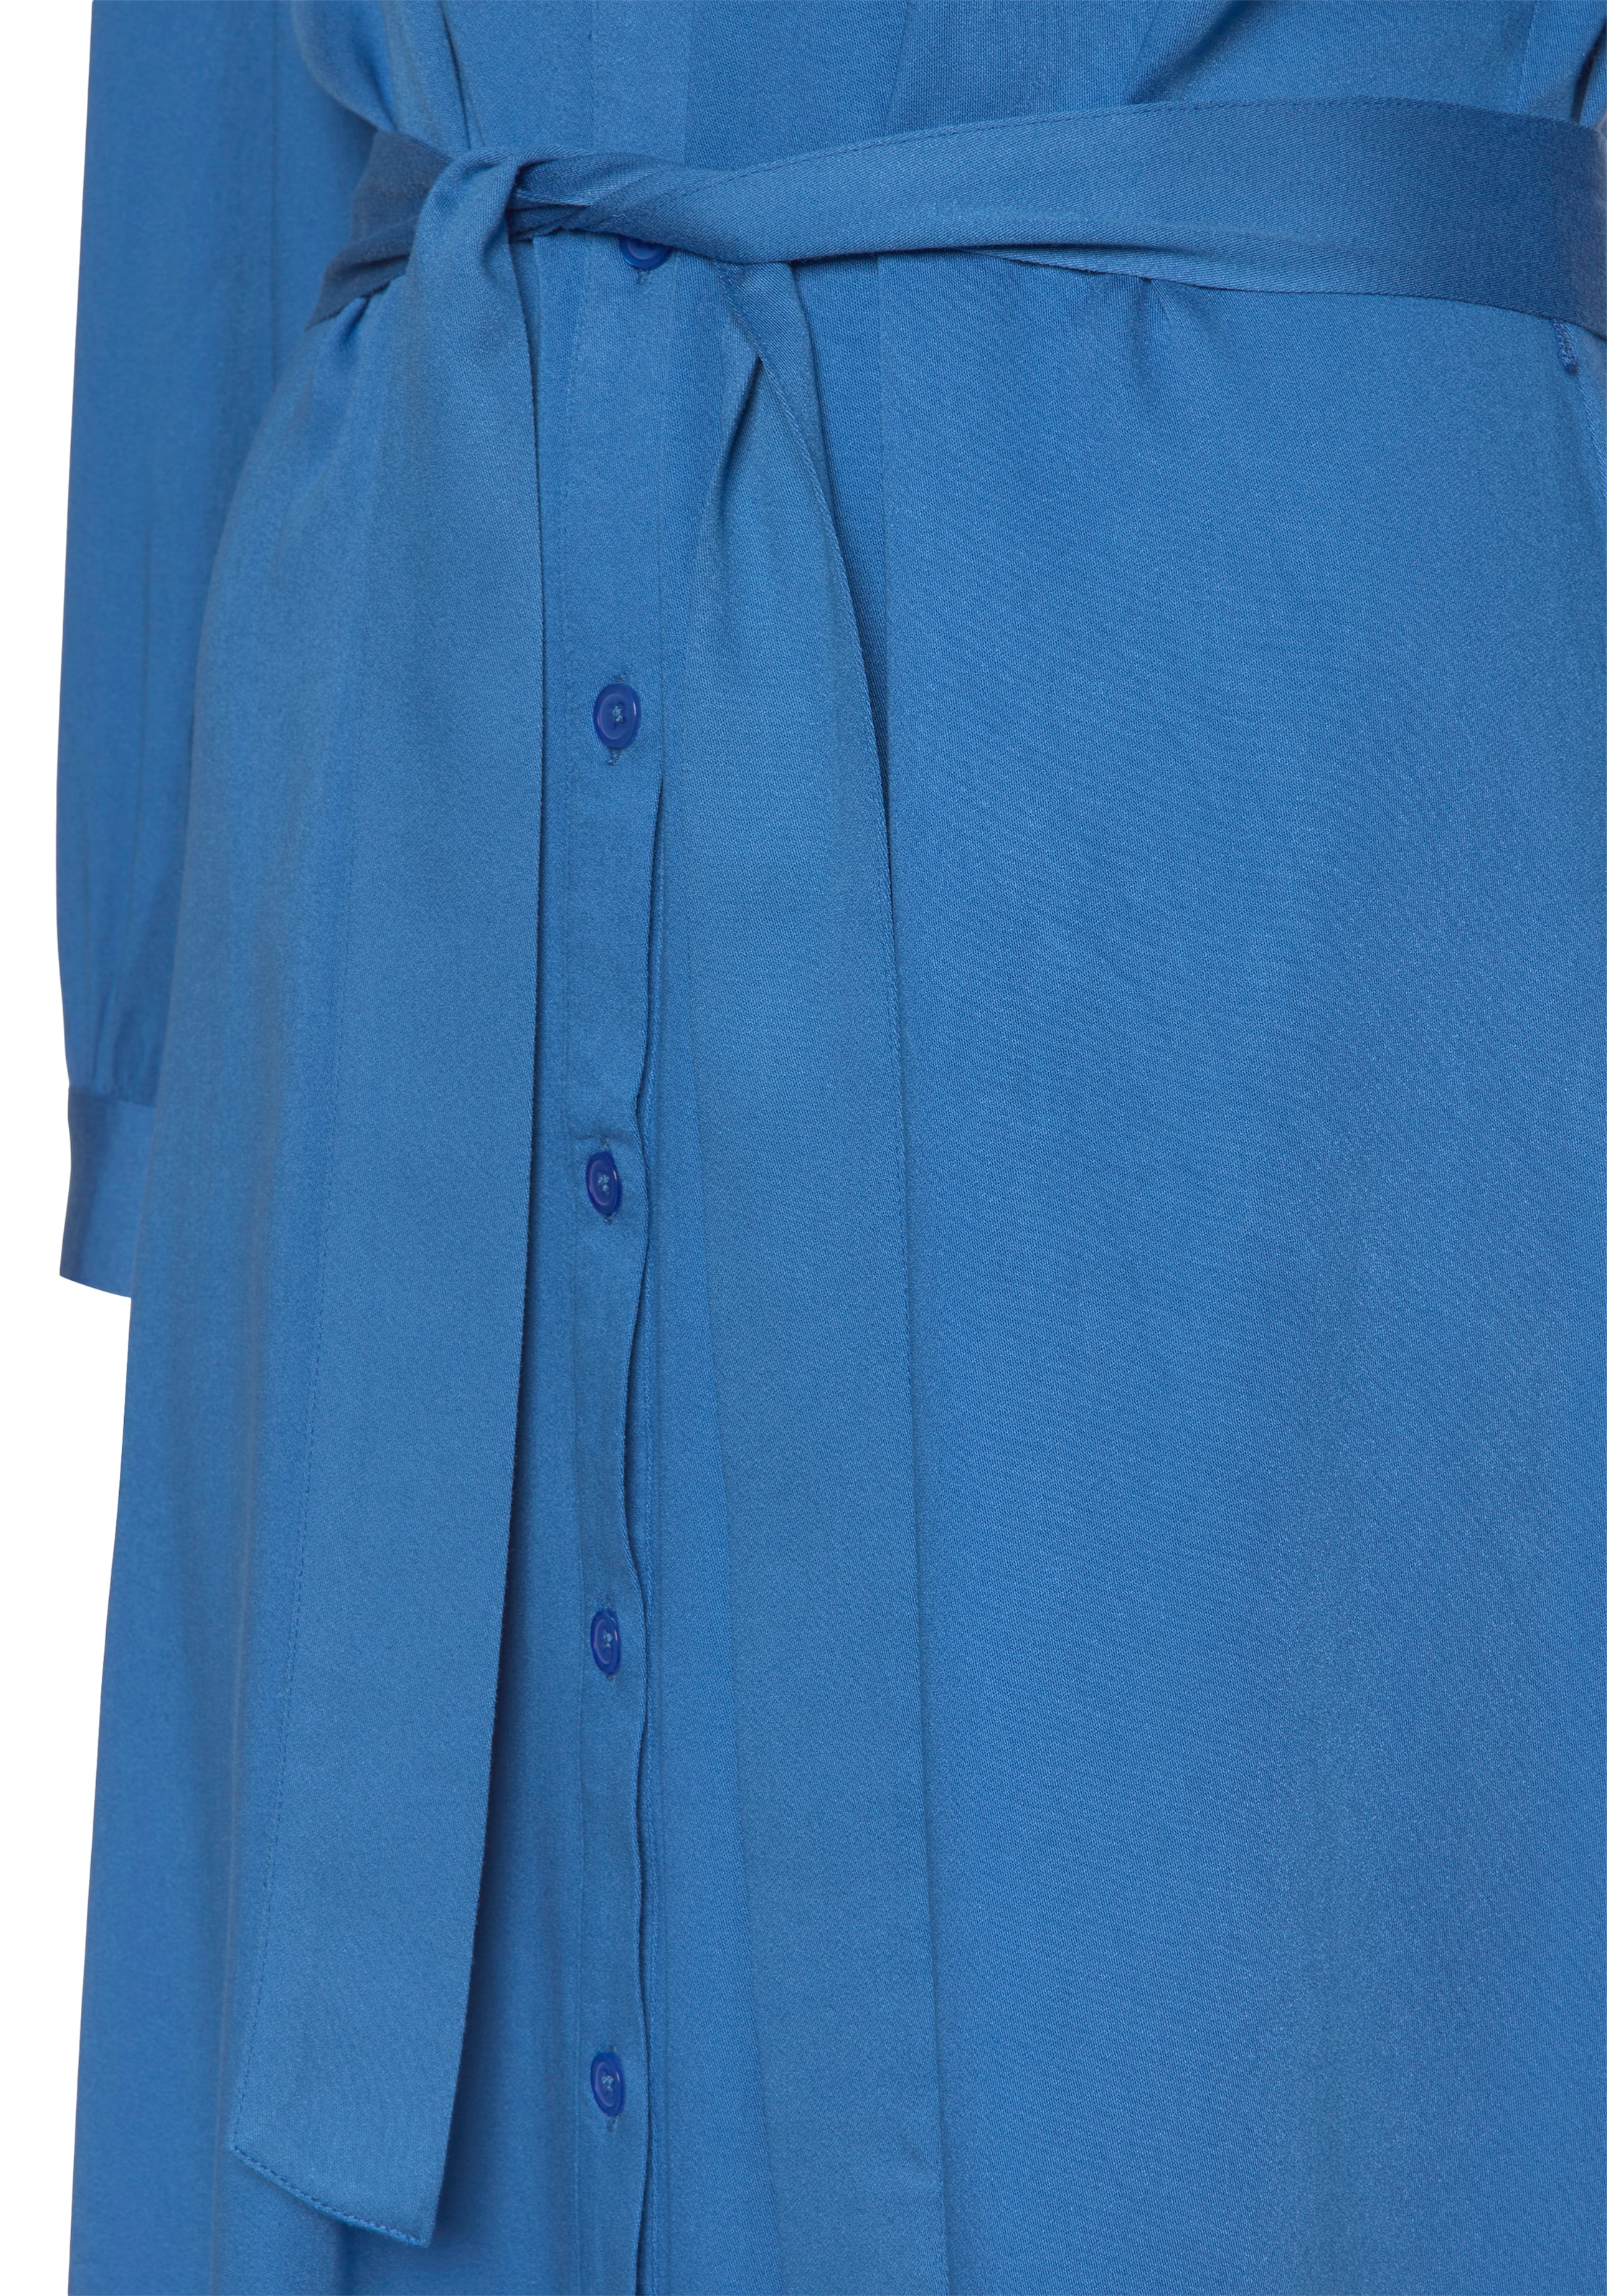 LASCANA Hemdblusenkleid, (mit Bindegürtel), in lockerer Passform, elegantes Sommerkleid, Midikleid